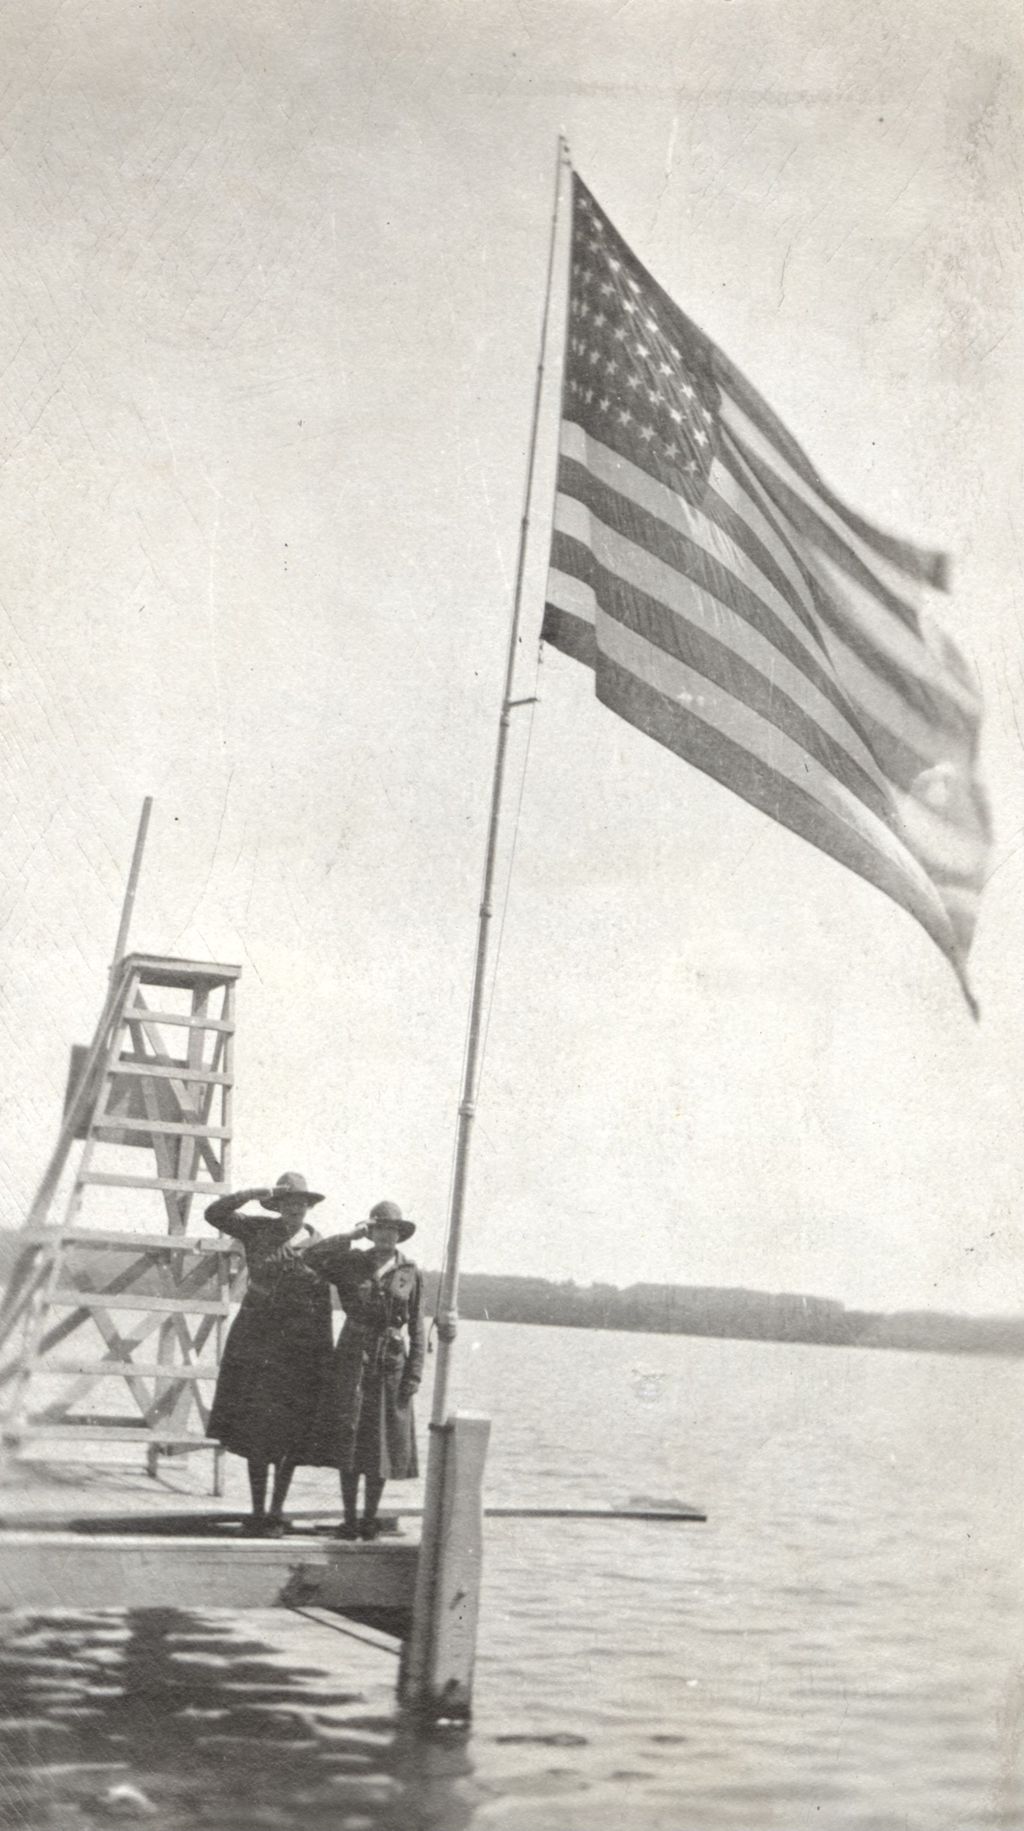 Women in uniforms saluting an American flag